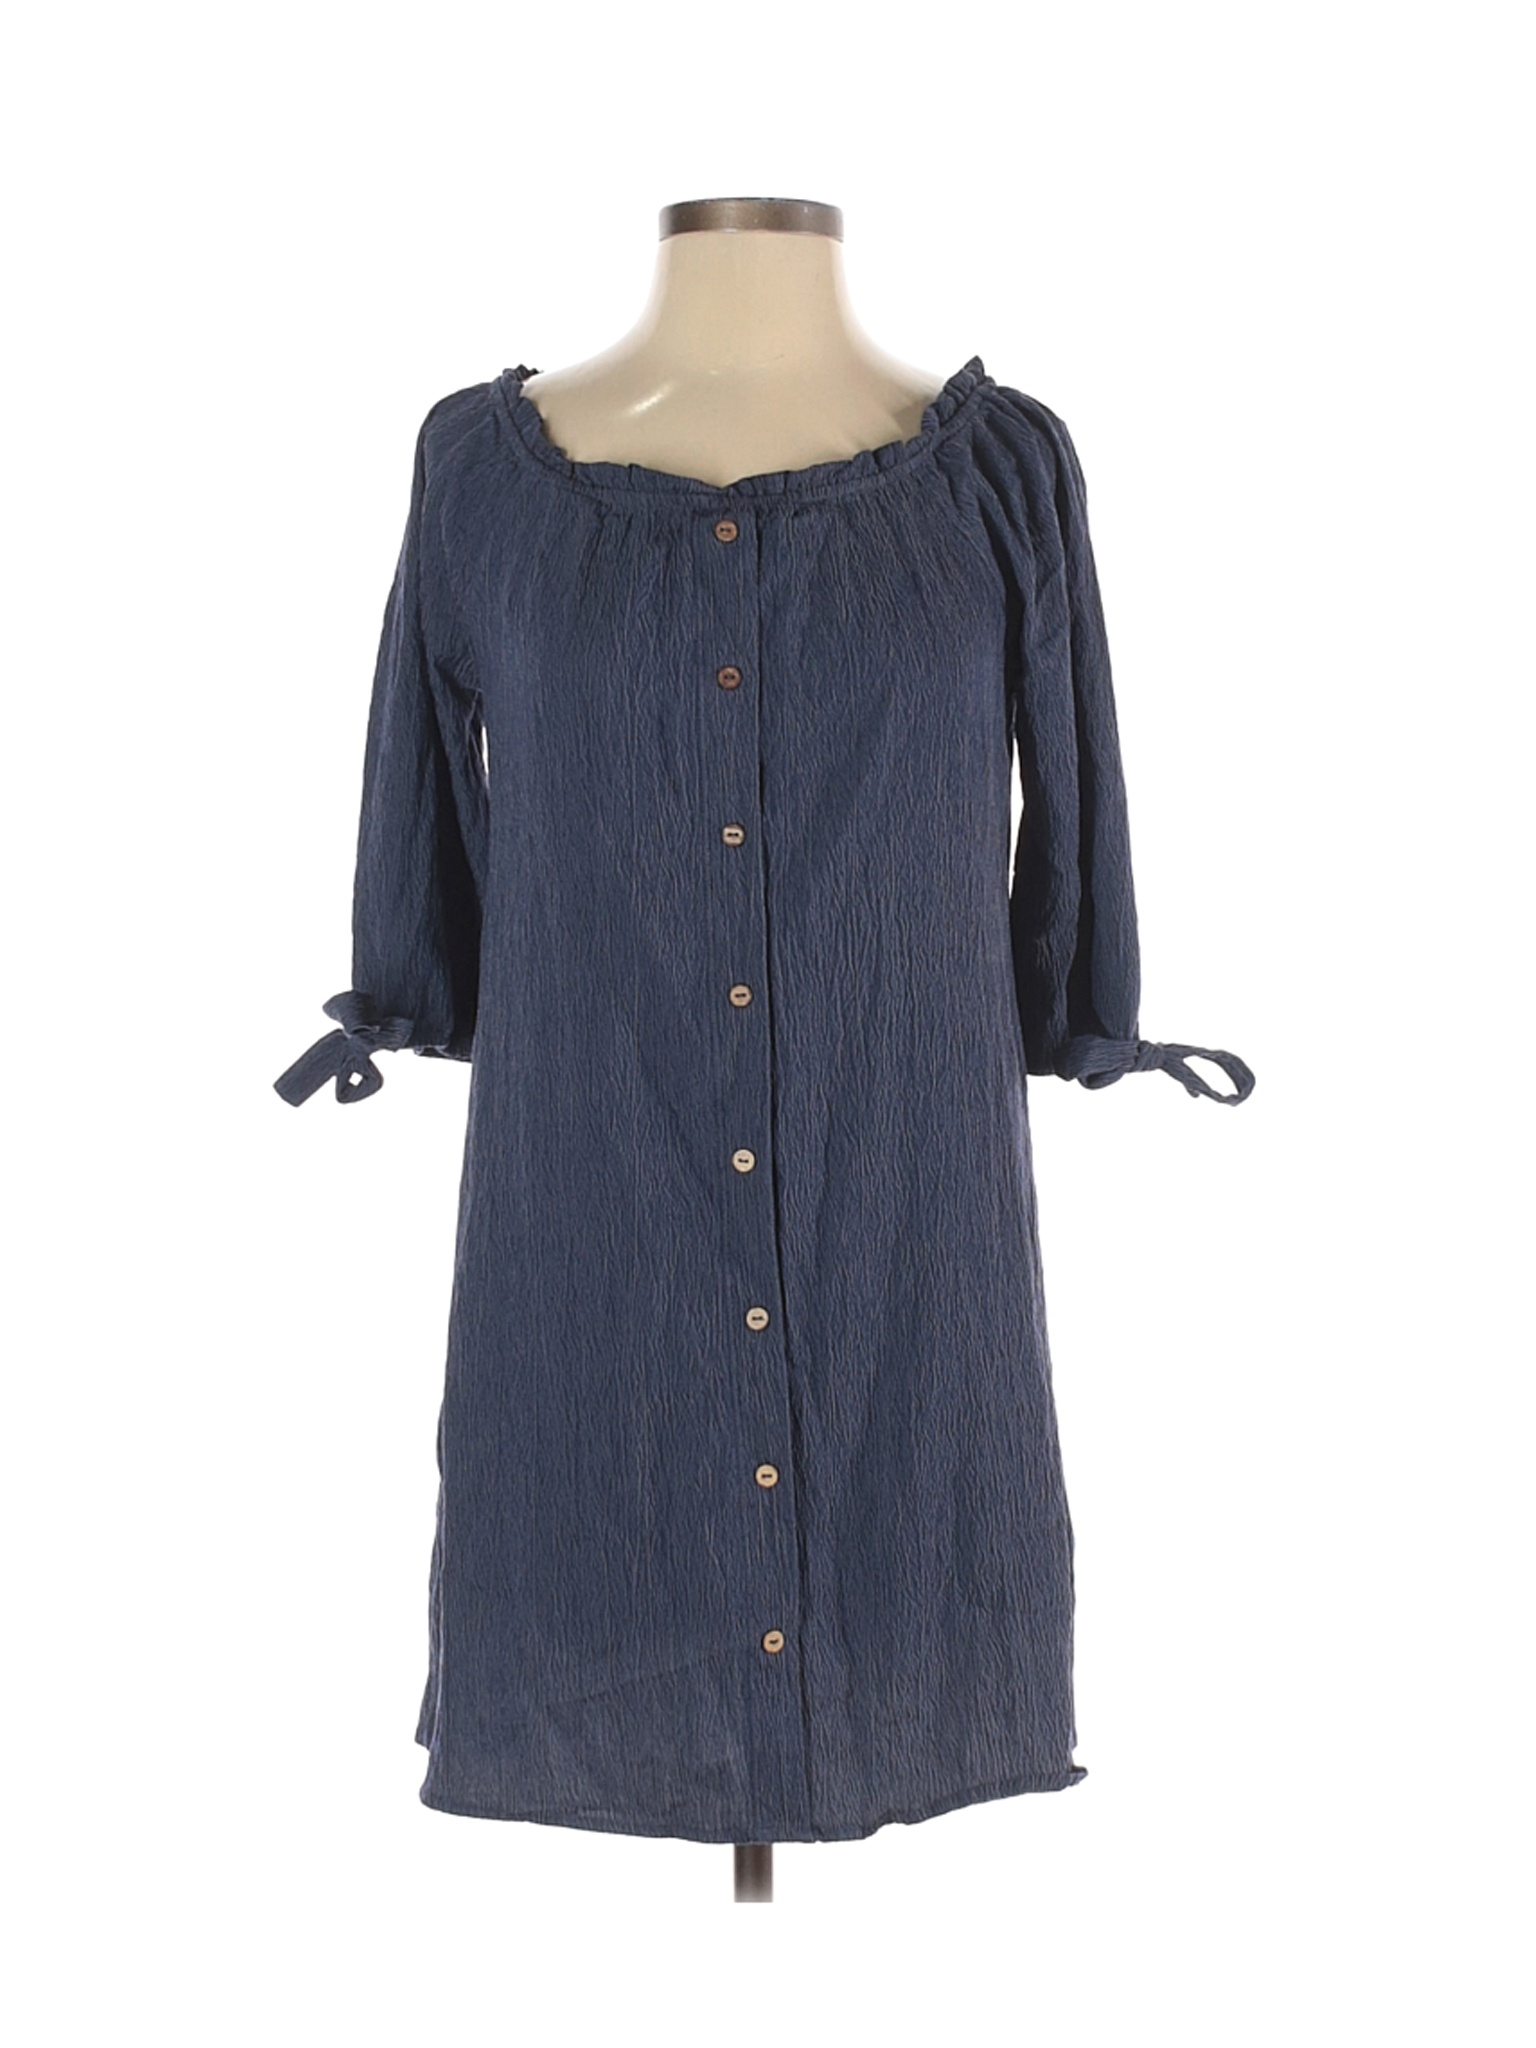 Naif Women Blue Casual Dress S | eBay